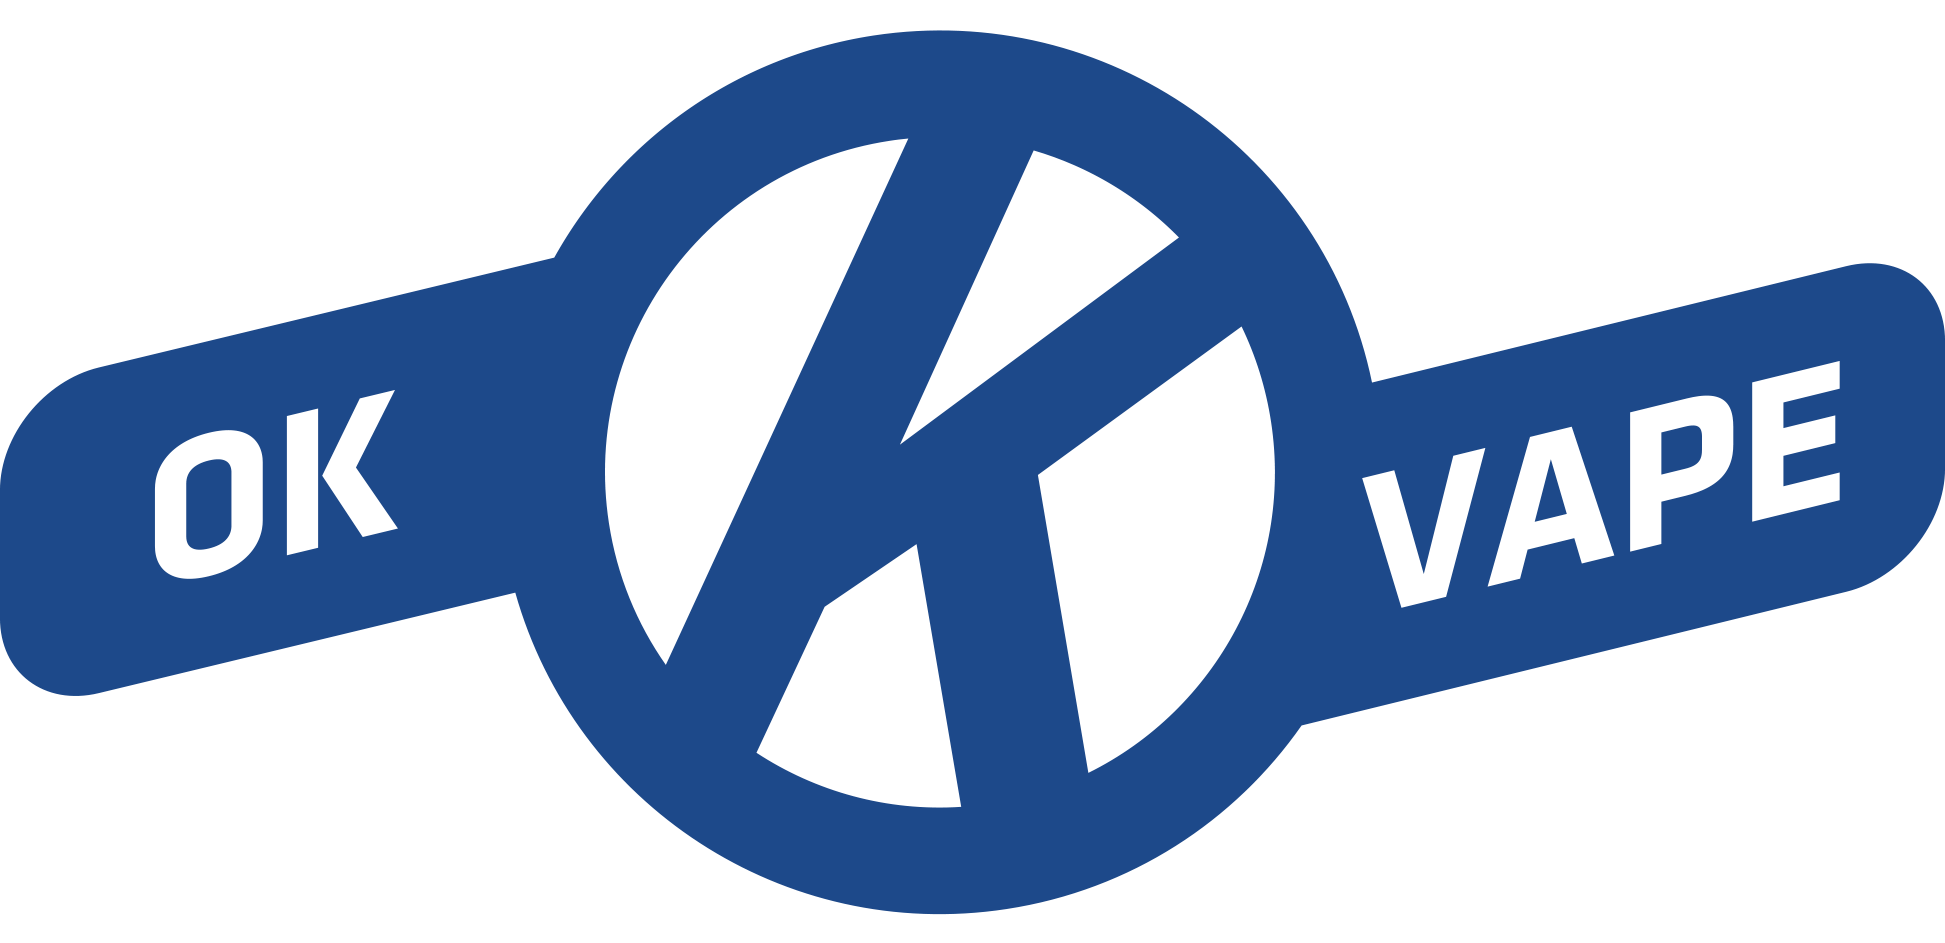 Ok Vape logo